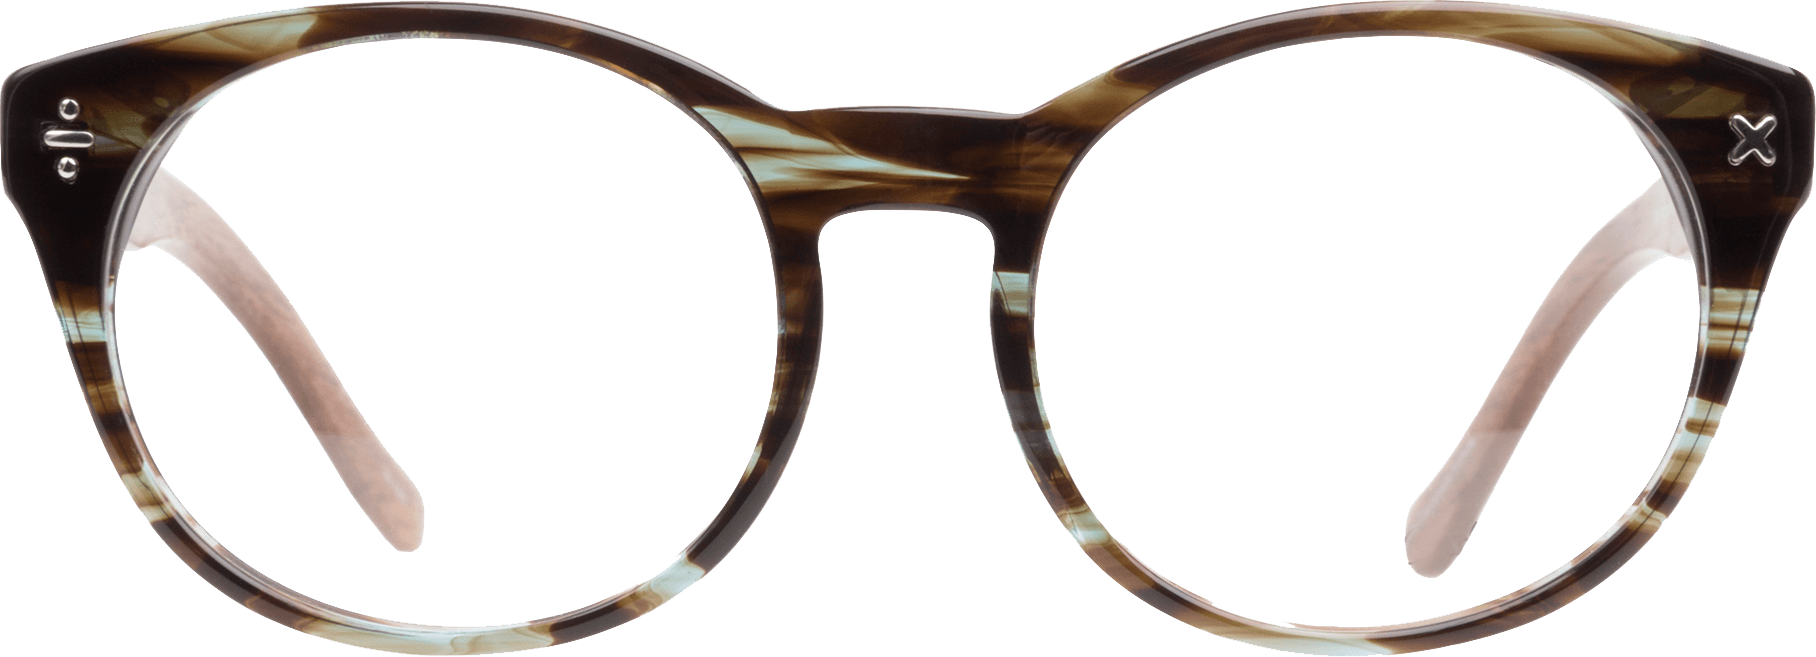 Glasses Frame Shape Guide - Sunglass Frames Png (1816x657)